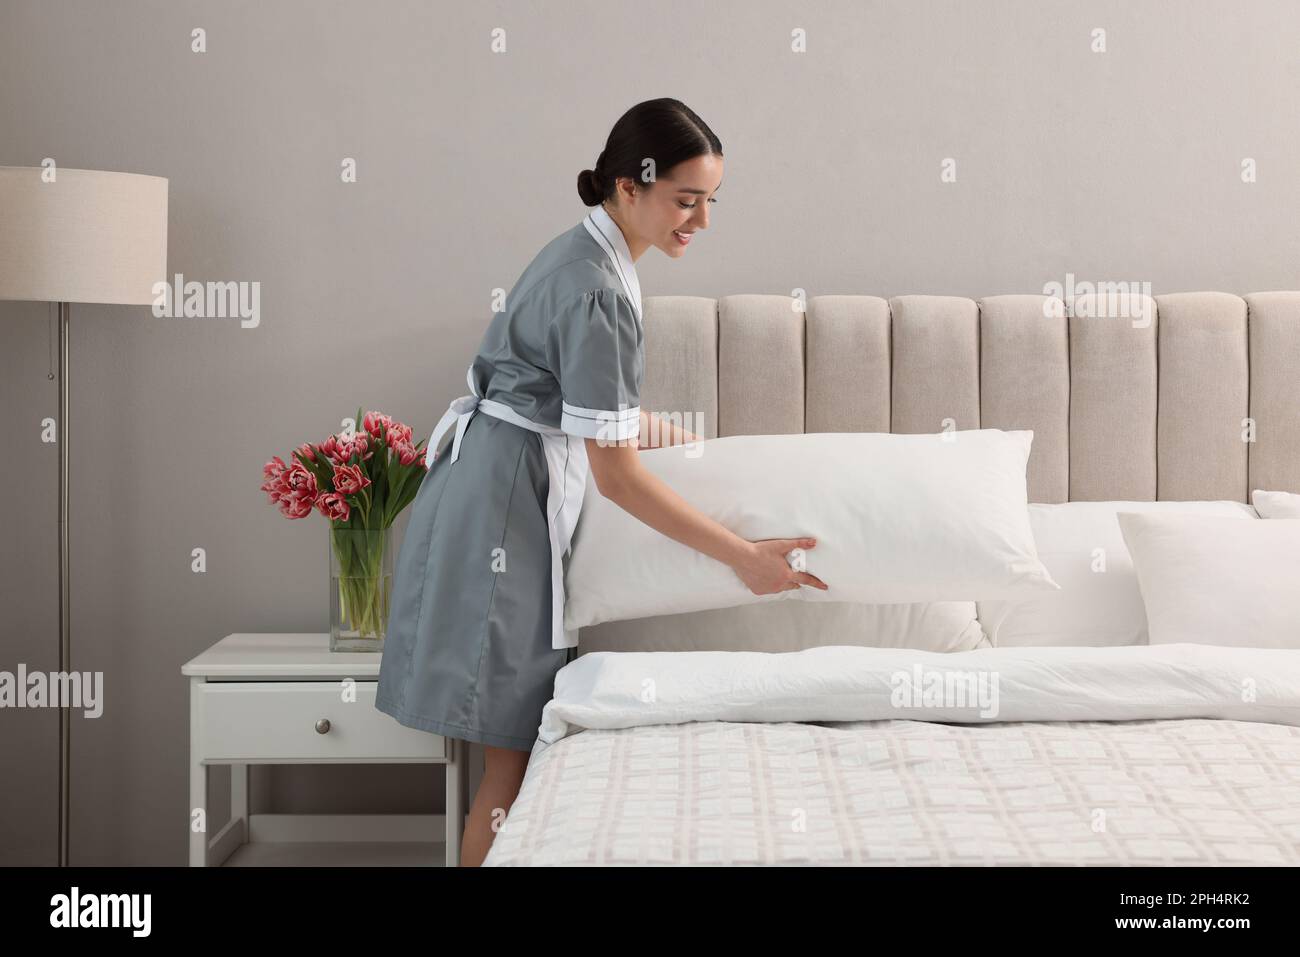 https://c8.alamy.com/comp/2PH4RK2/professional-chambermaid-making-bed-in-hotel-room-2PH4RK2.jpg